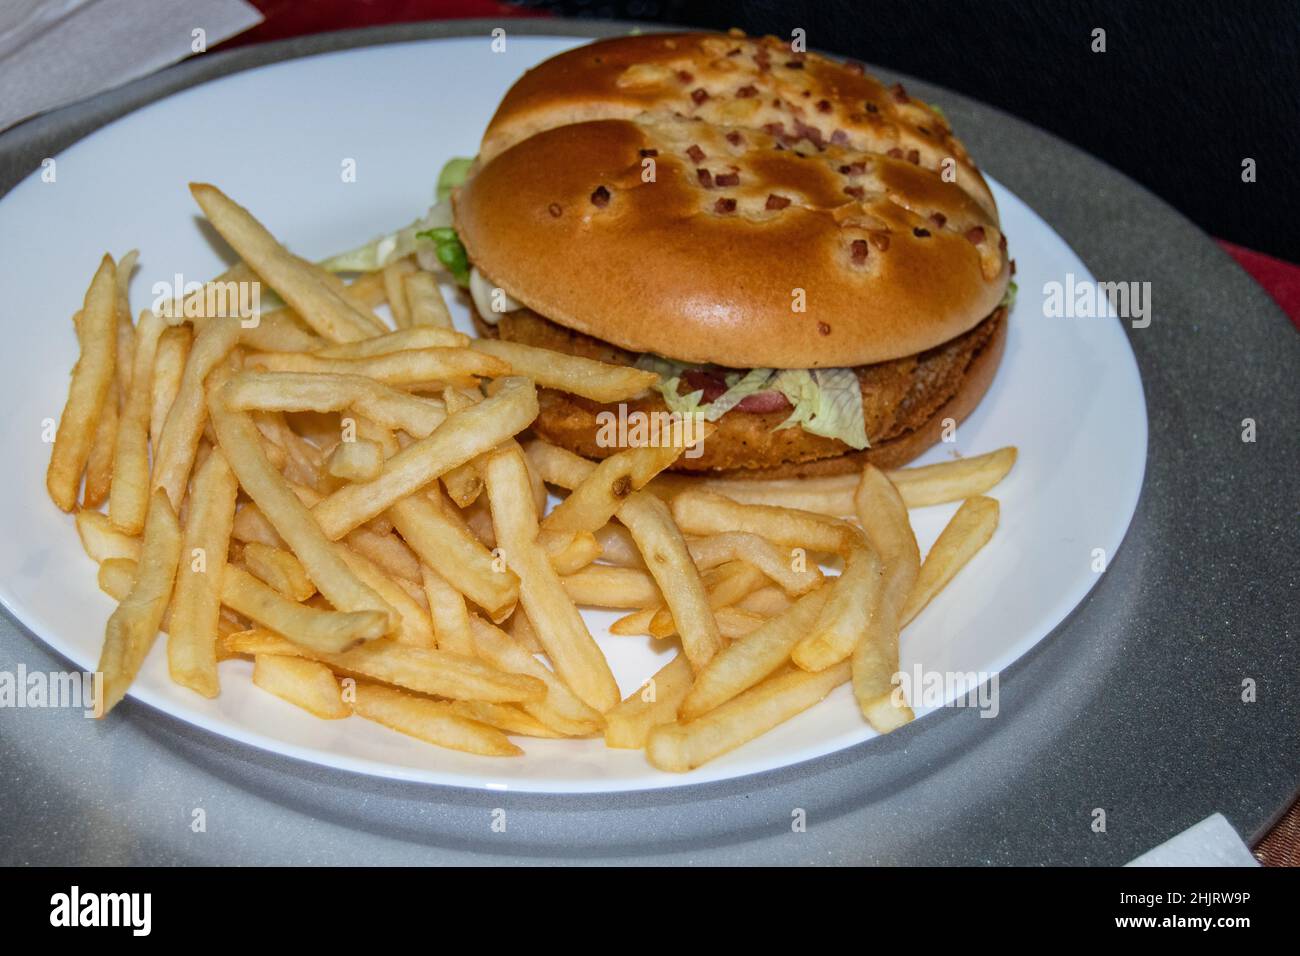 Sandwich-Hamburger mit pommes frites Stockfoto